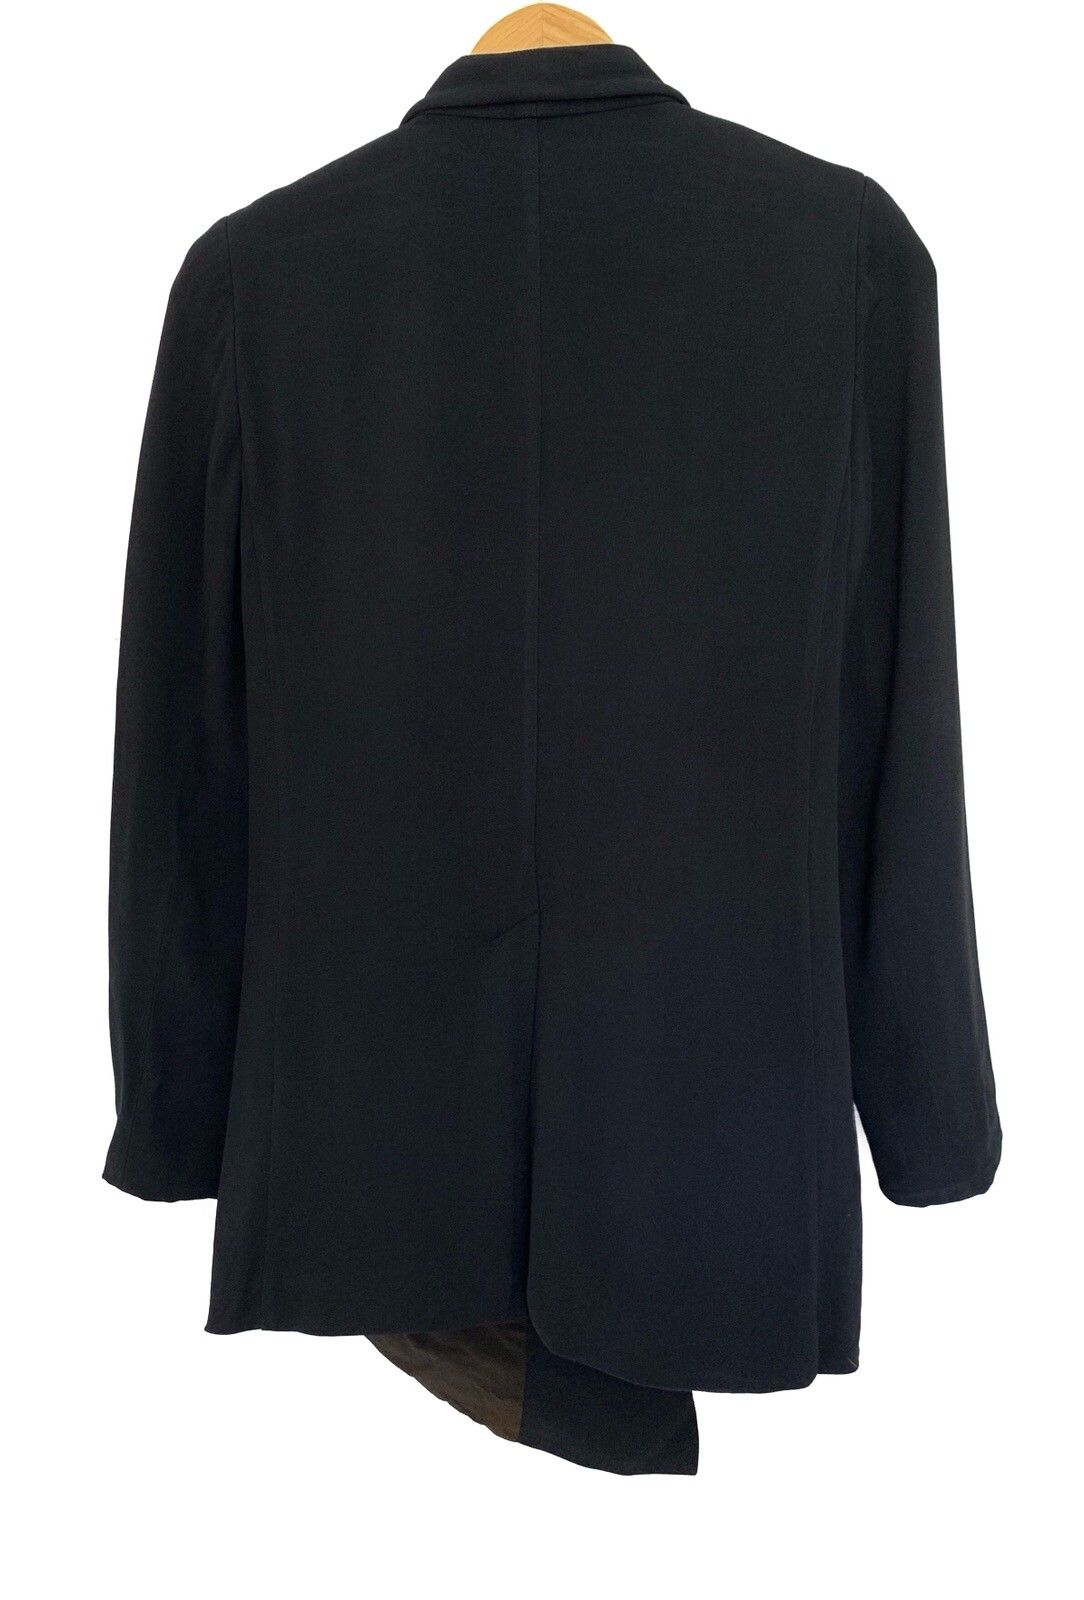 Gucci GUCCI Black Cardigan Blazer Jacket Size US S / EU 44-46 / 1 - 3 Thumbnail